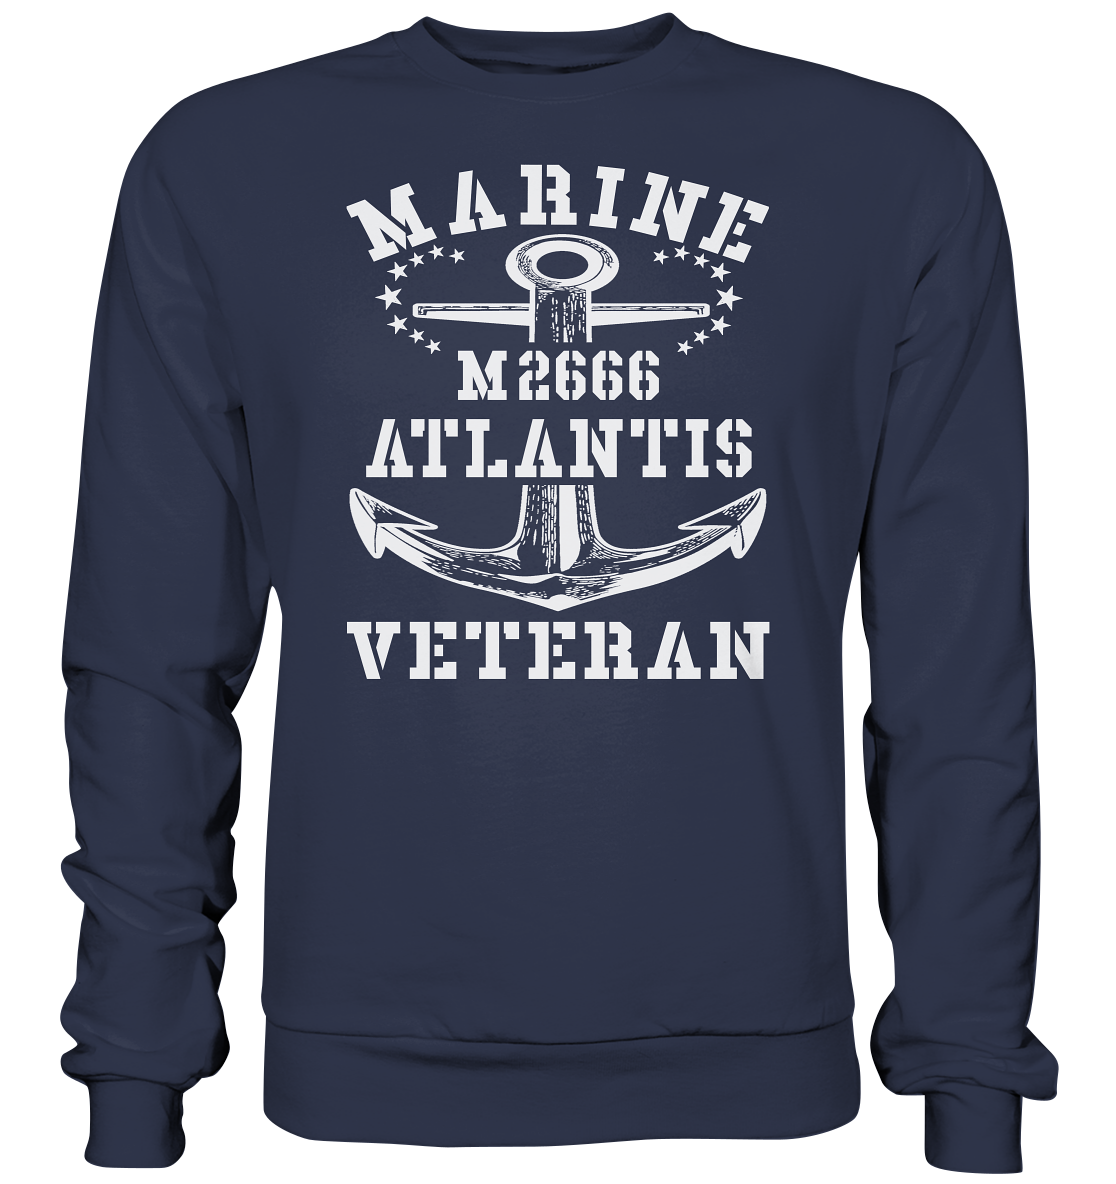 BiMi M2666 ATLANTIS Marine Veteran - Premium Sweatshirt